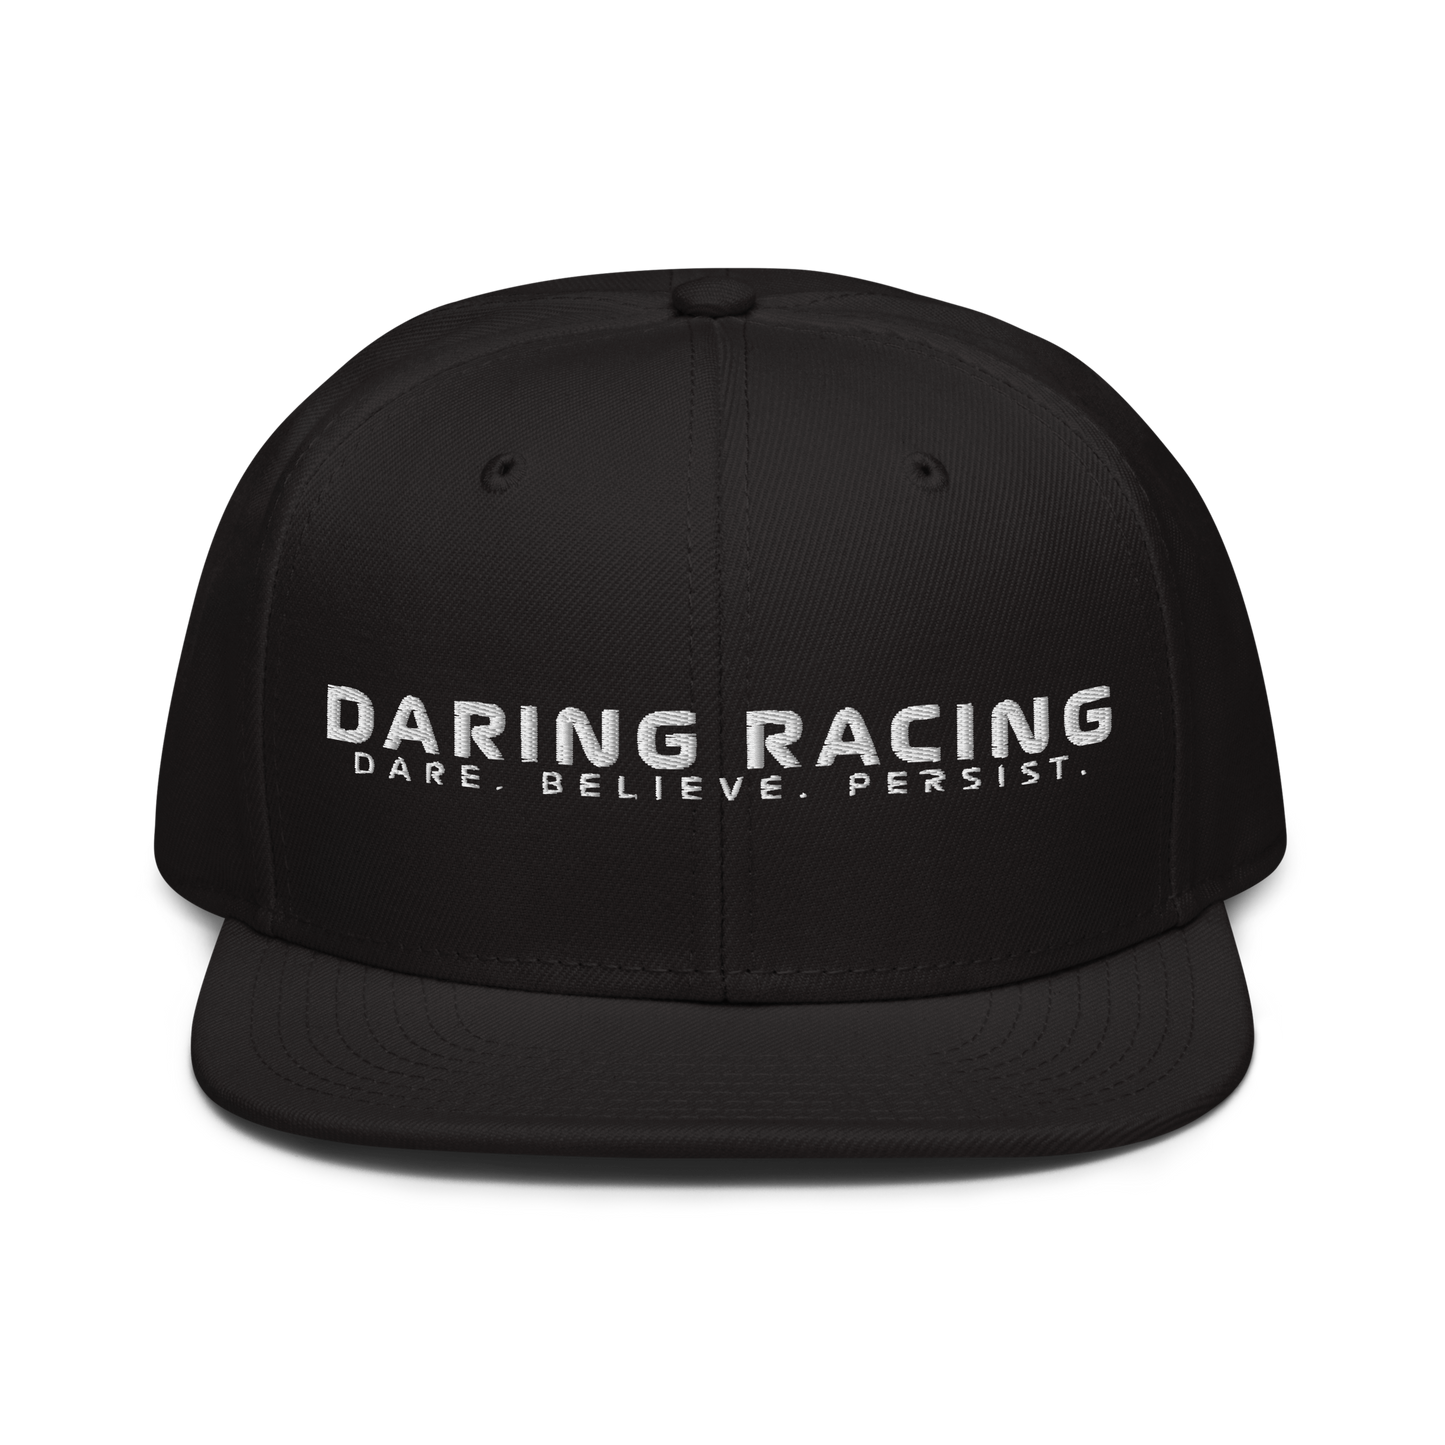 Daring Racing 2024 - Dare. Believe. Persist.